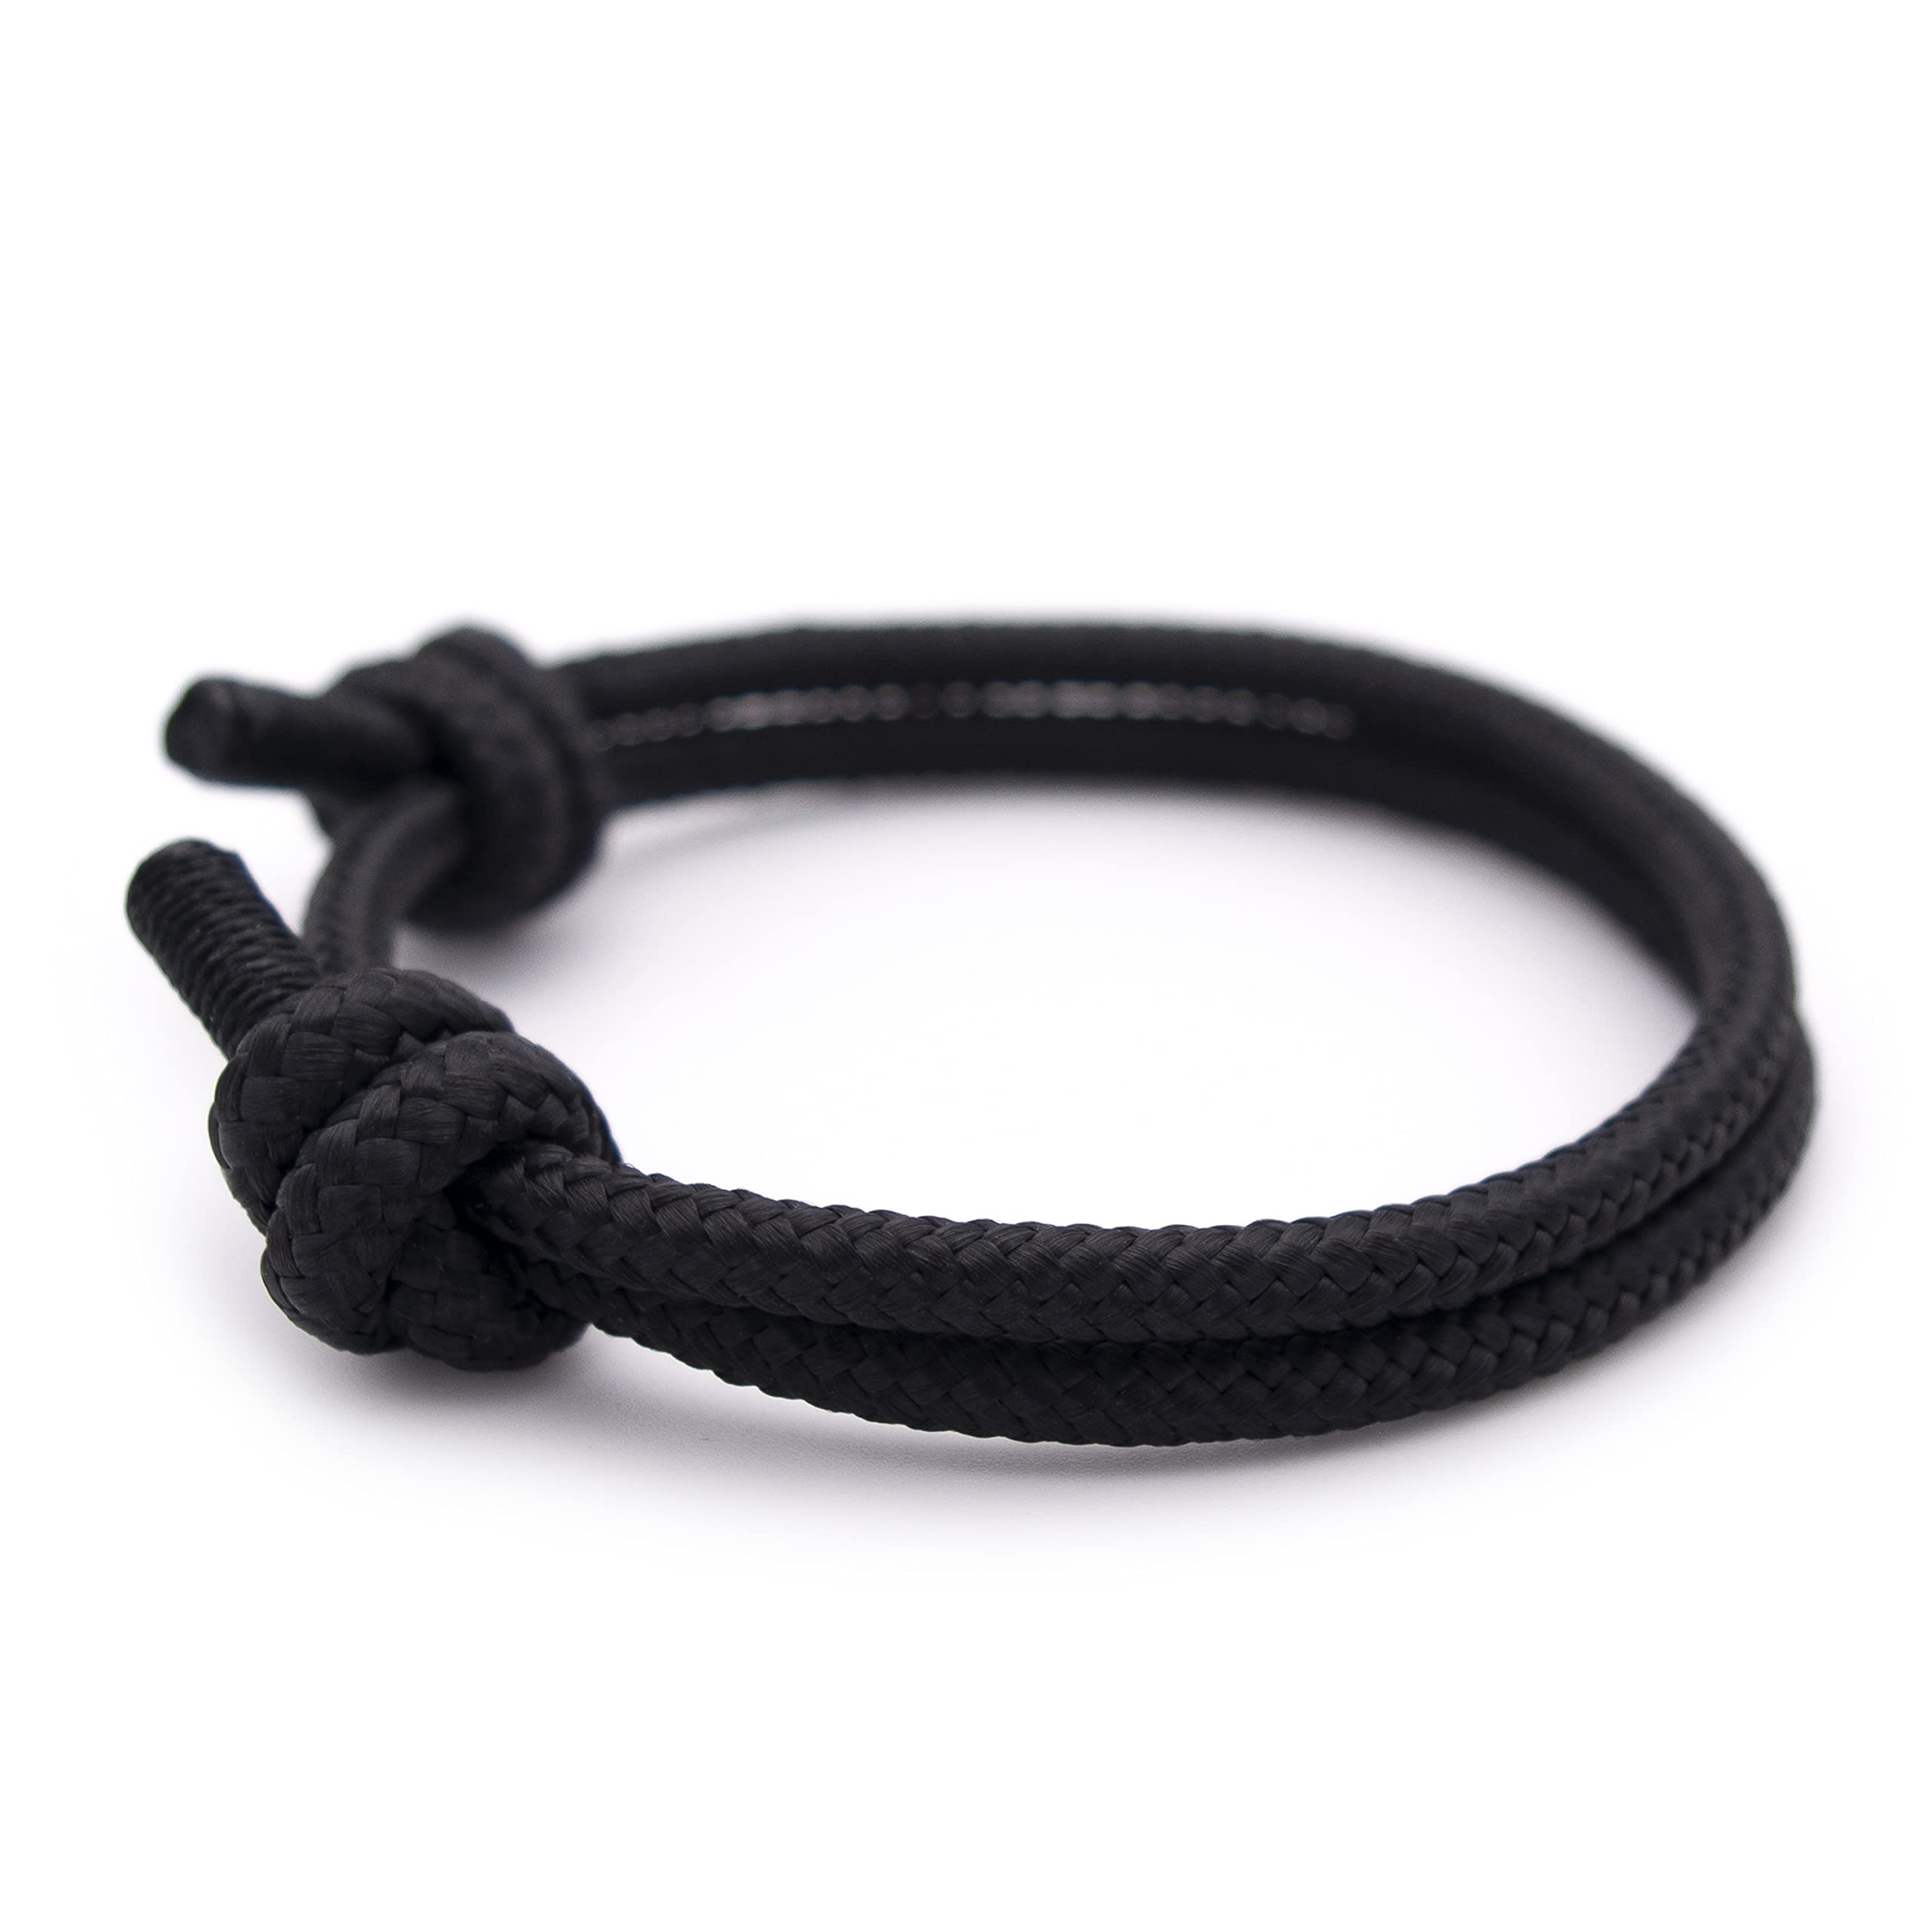 Wind Passion - Rope Bracelet for Men - Bracelet for Women - Adjustable String Bracelet for Men - Sailors Knot Ripcord Bracelet - Nautical Mens Wrist Bracelet - Sturdy & Waterproof Paracord Bracelet